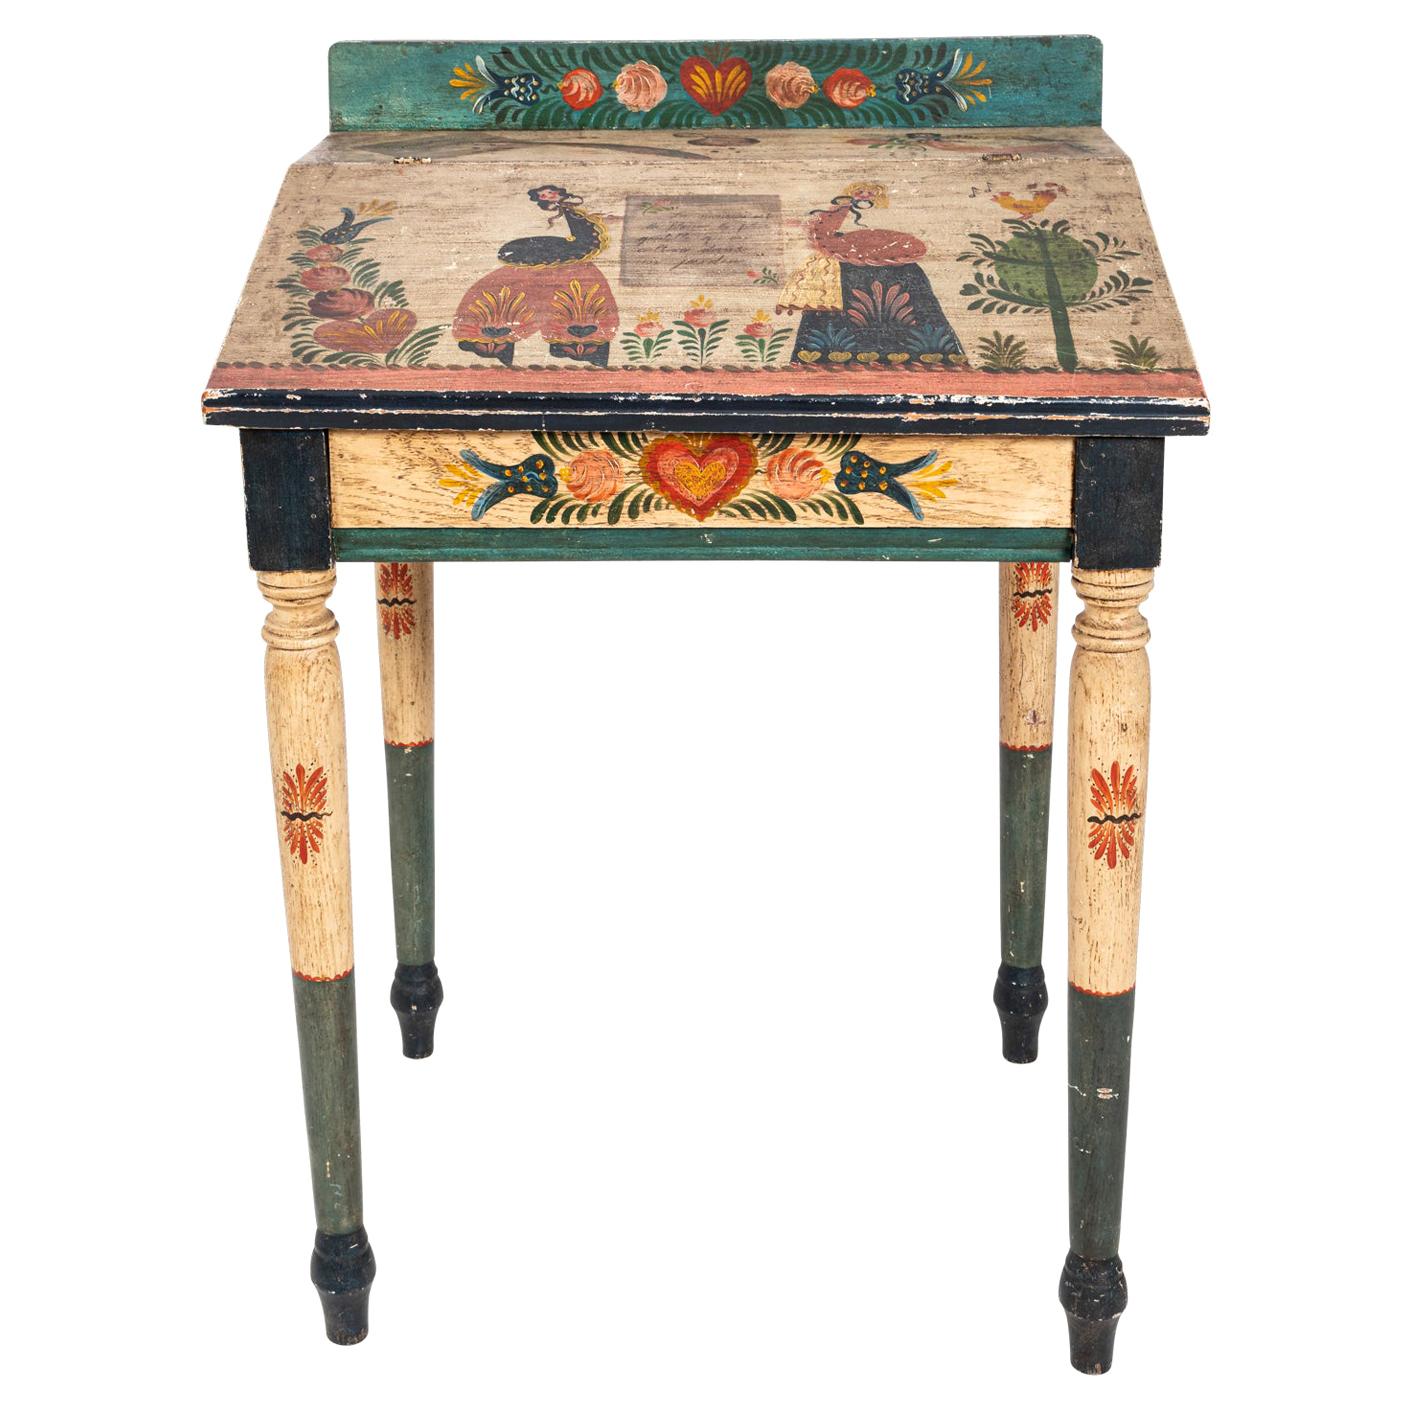 Painted Folk Art Writing Table